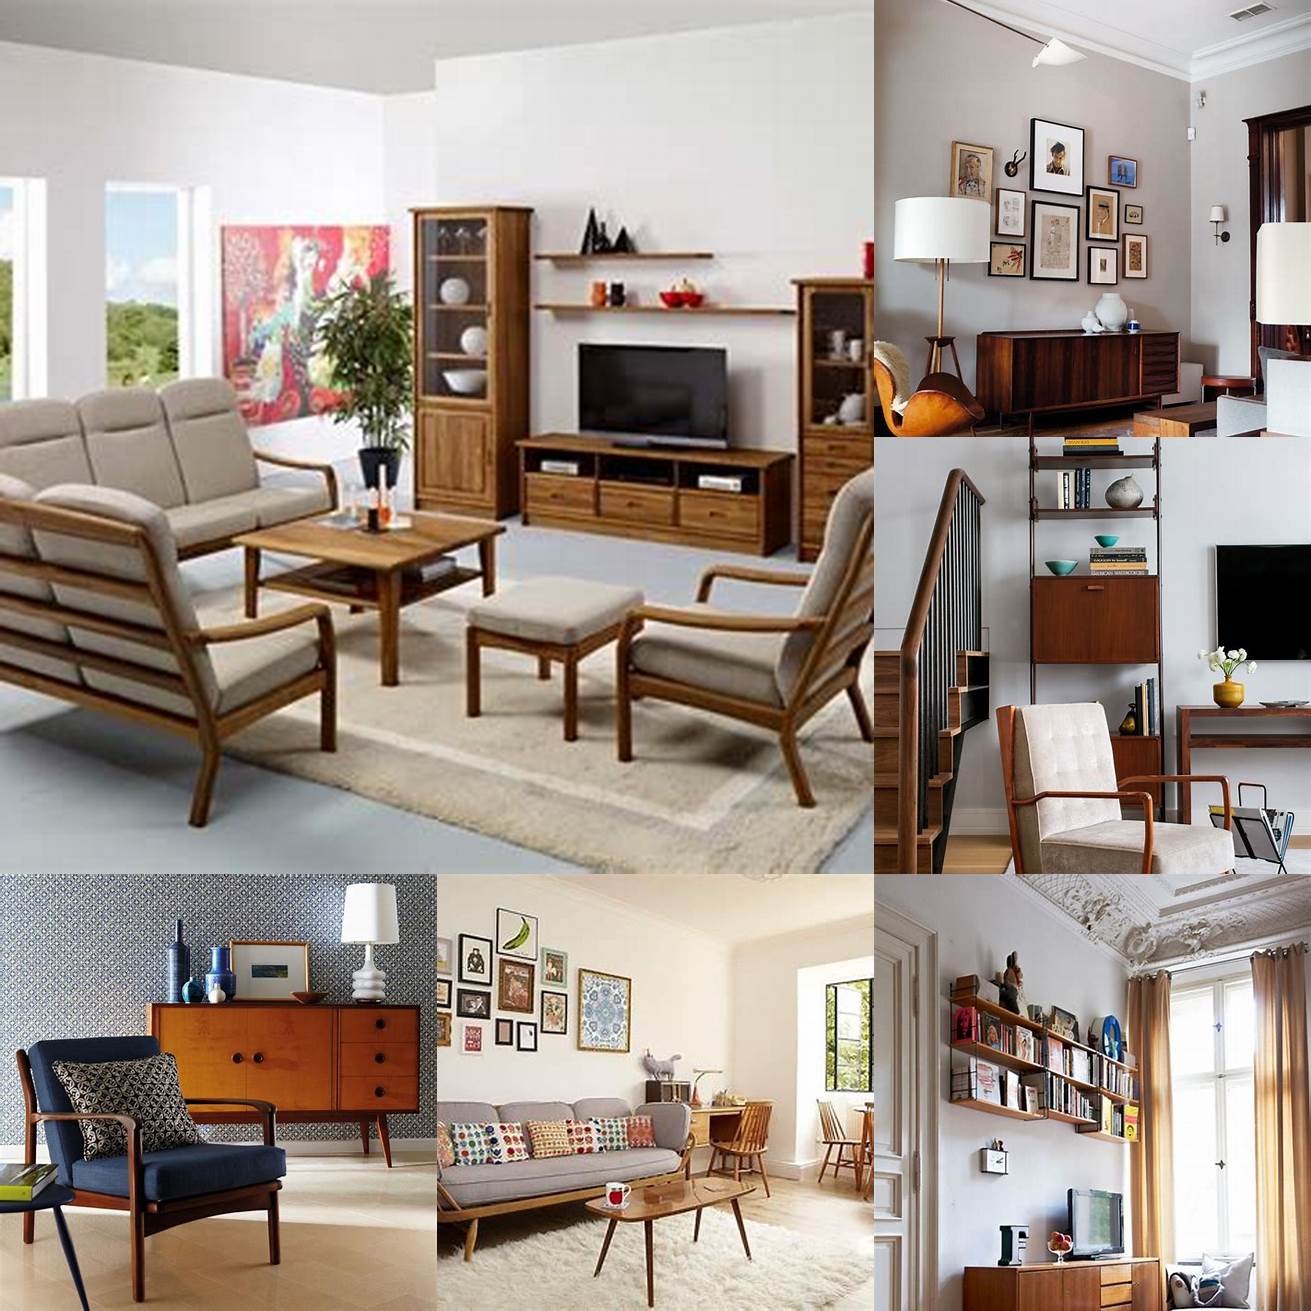 Teak Furniture in a Living Room